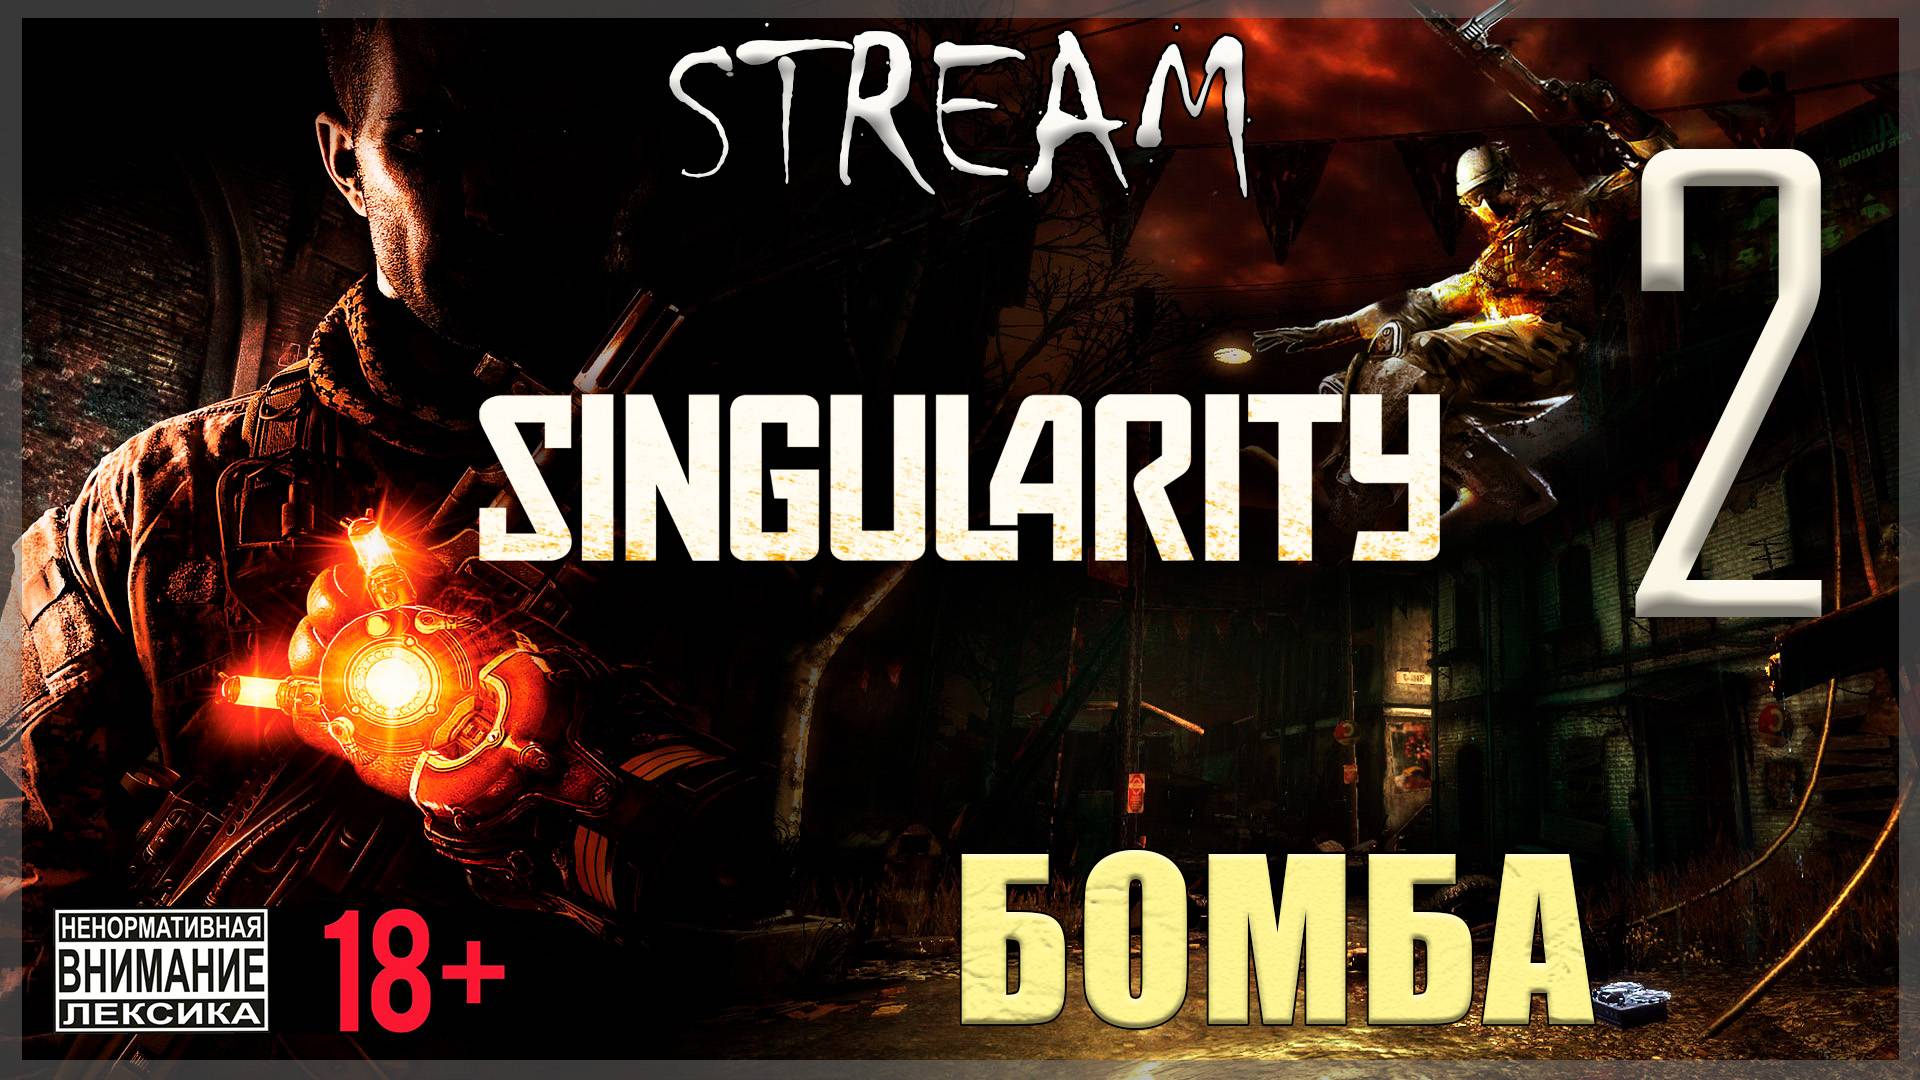 Stream - Singularity #1 Бомба